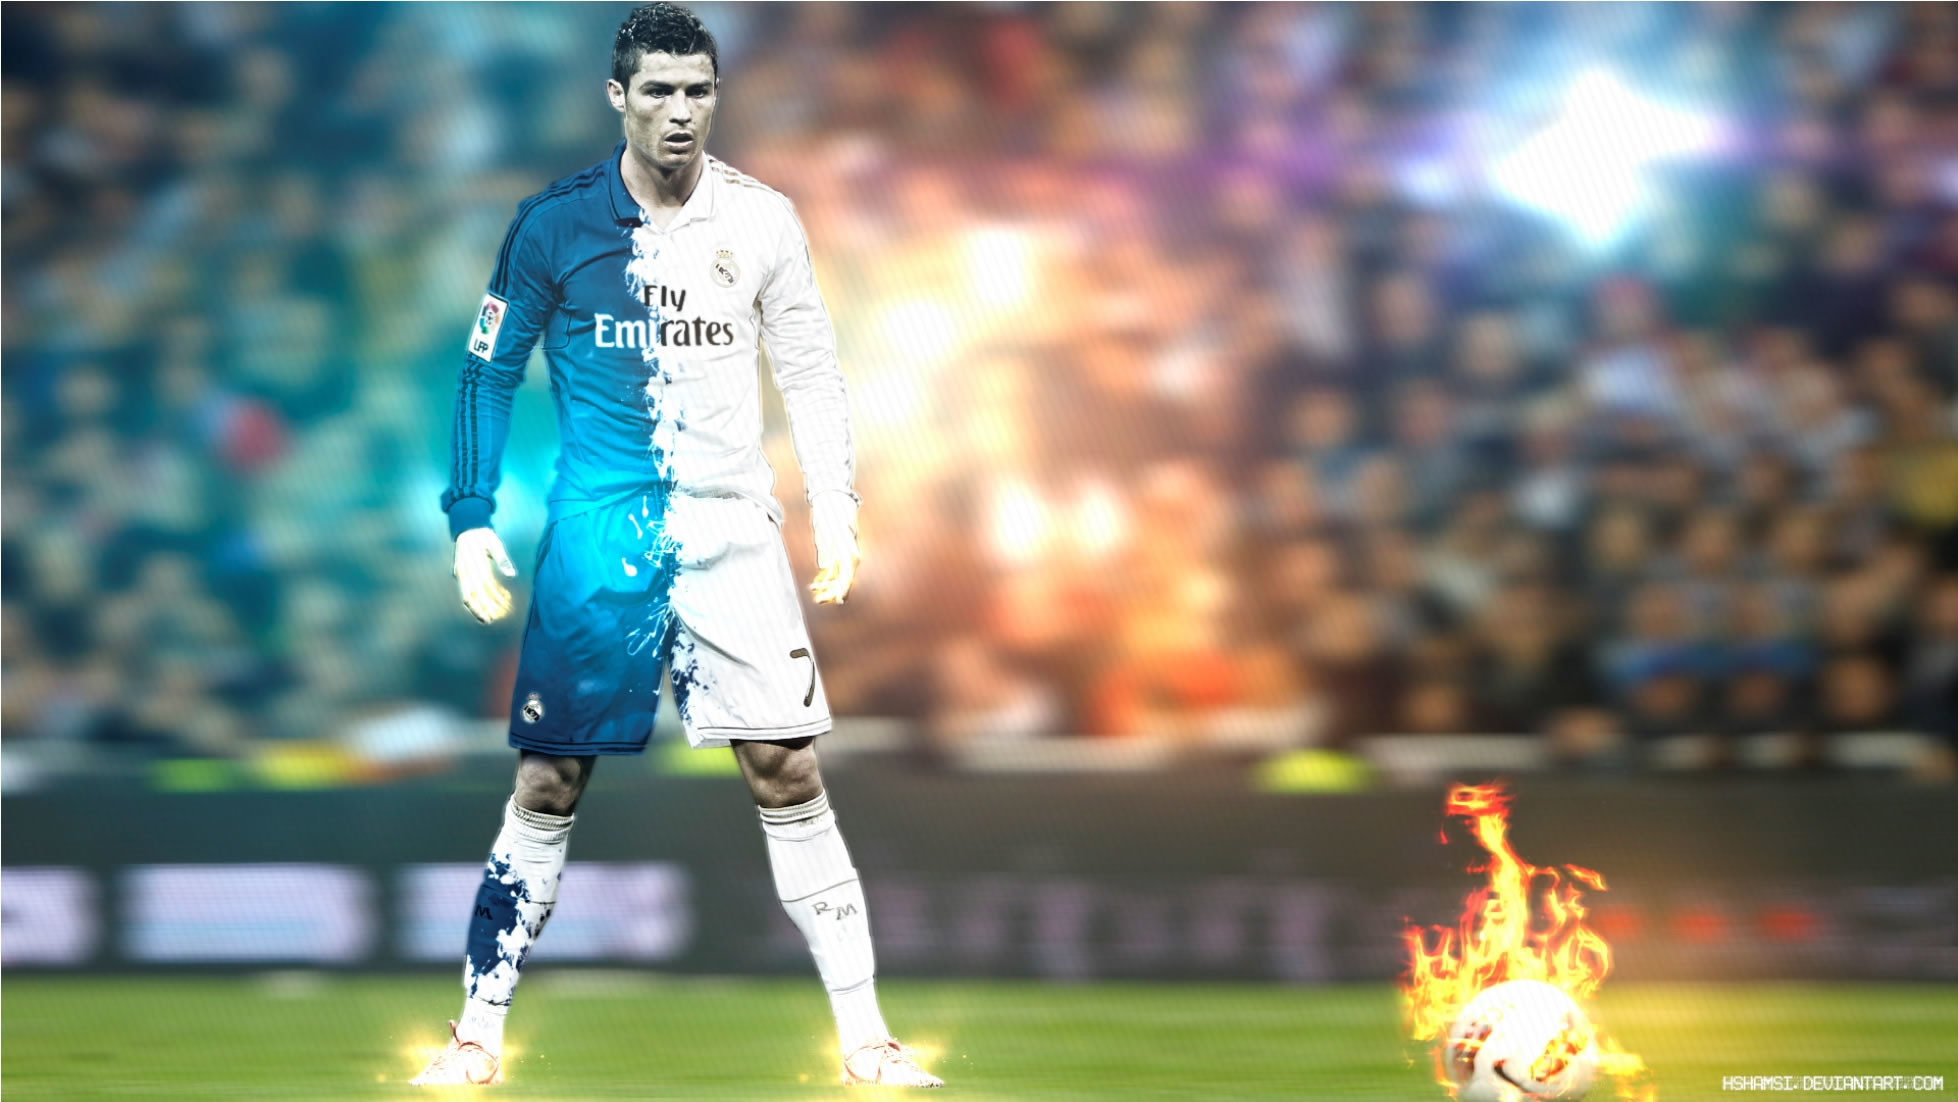 1958x1102 Wallpaper Ronaldo. Wallpaper Ronaldo. Cristiano Ronaldo Real Madrid ...